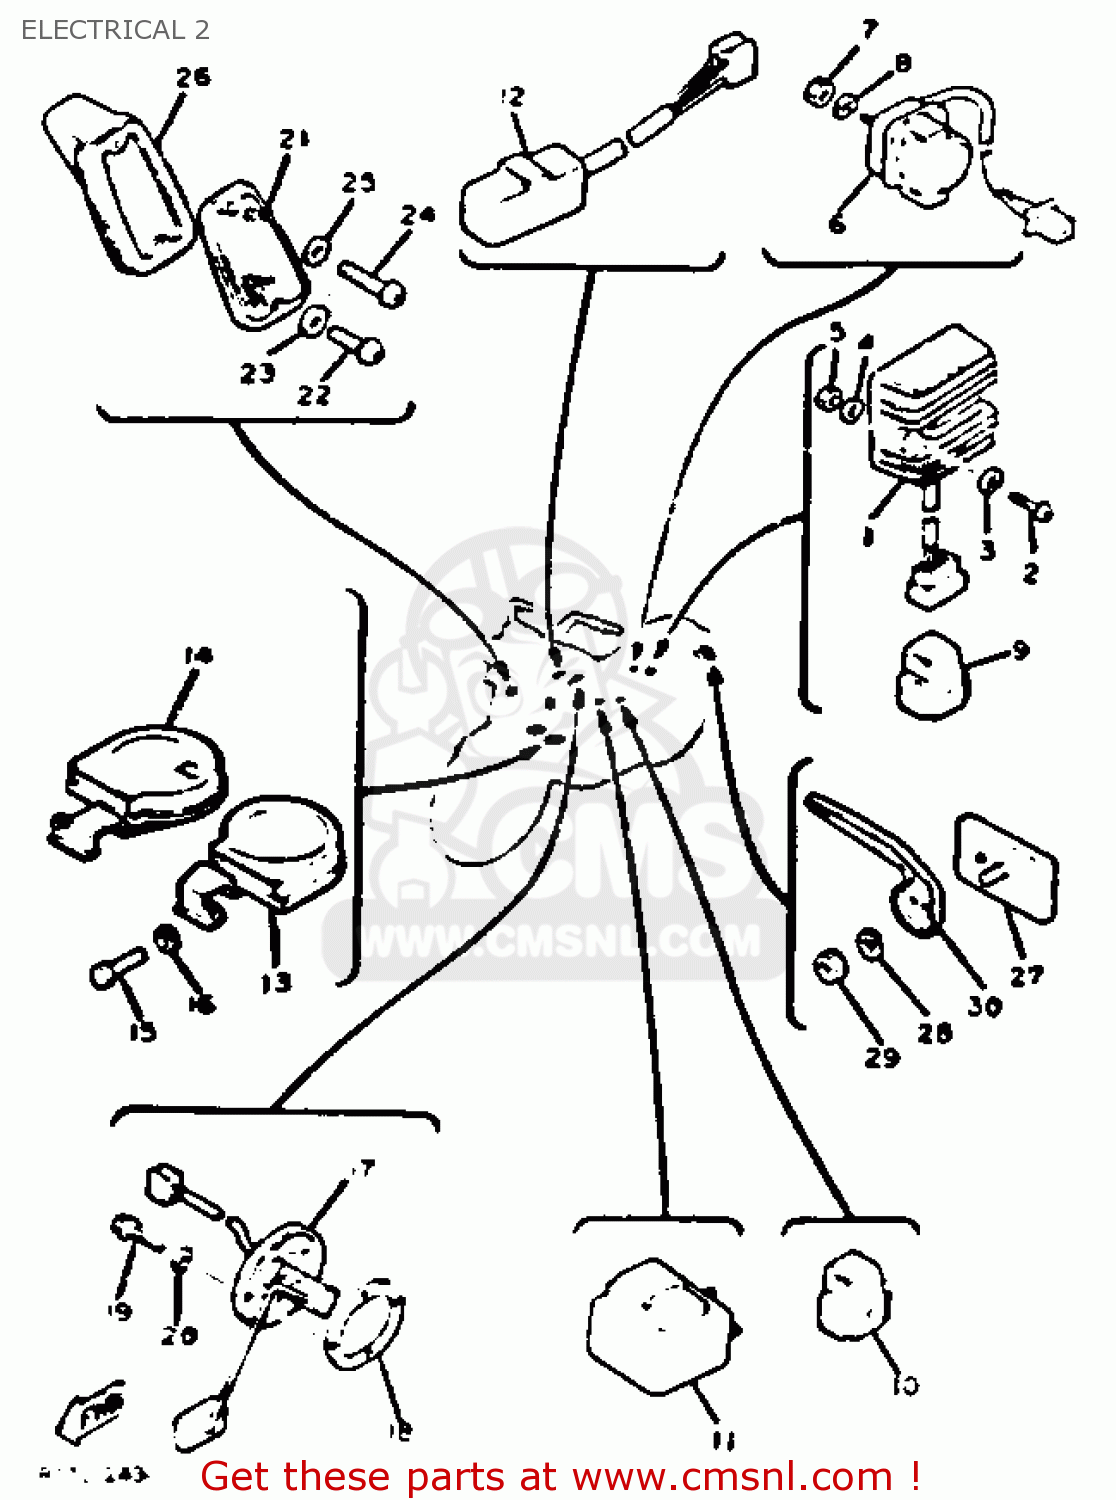 1982 yamaha xj750 wiring diagram